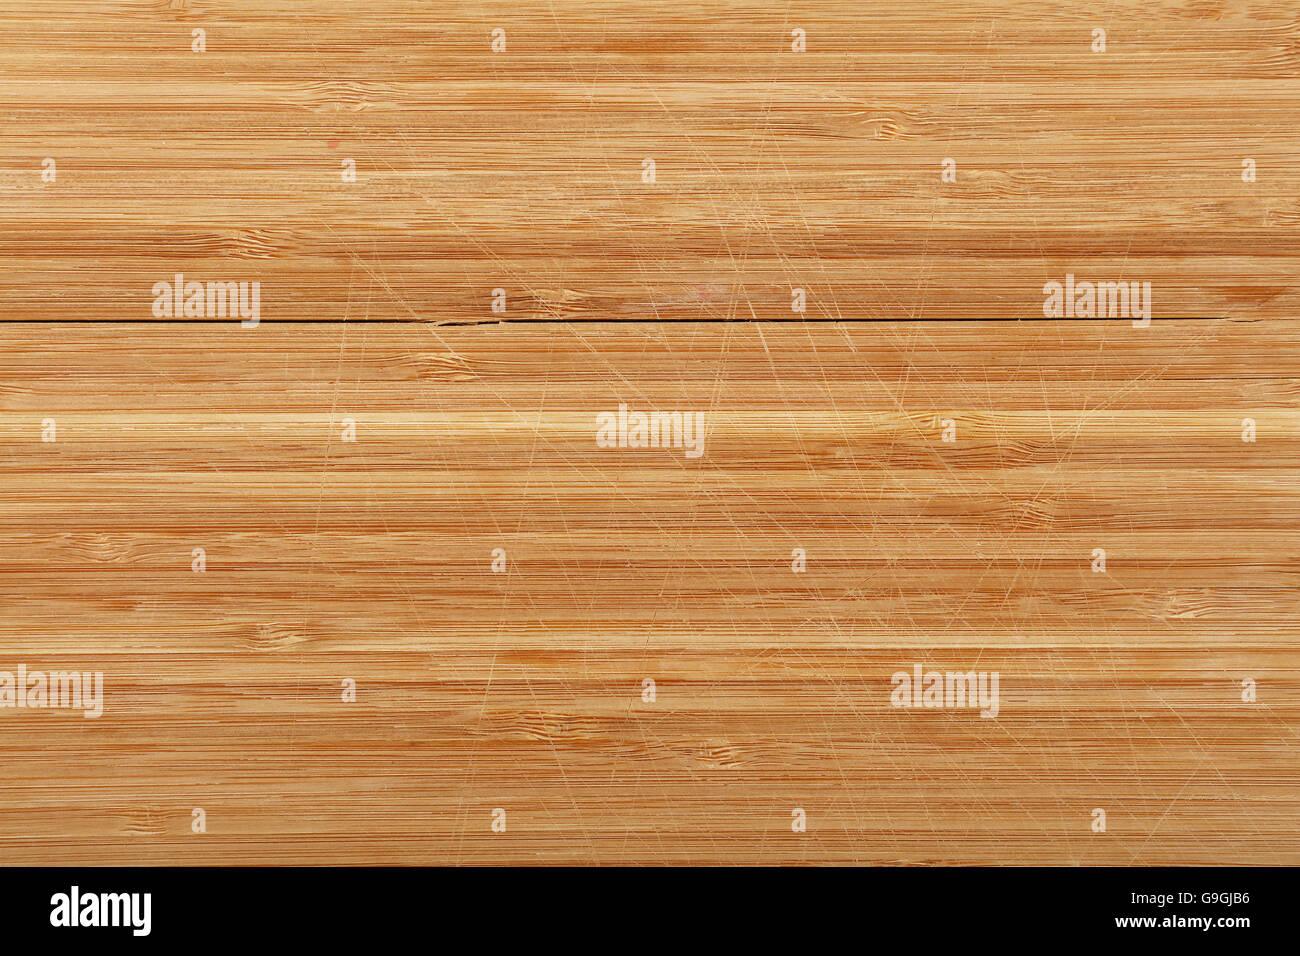 Metal kitchen thongs on wooden board Stock Photo - Alamy